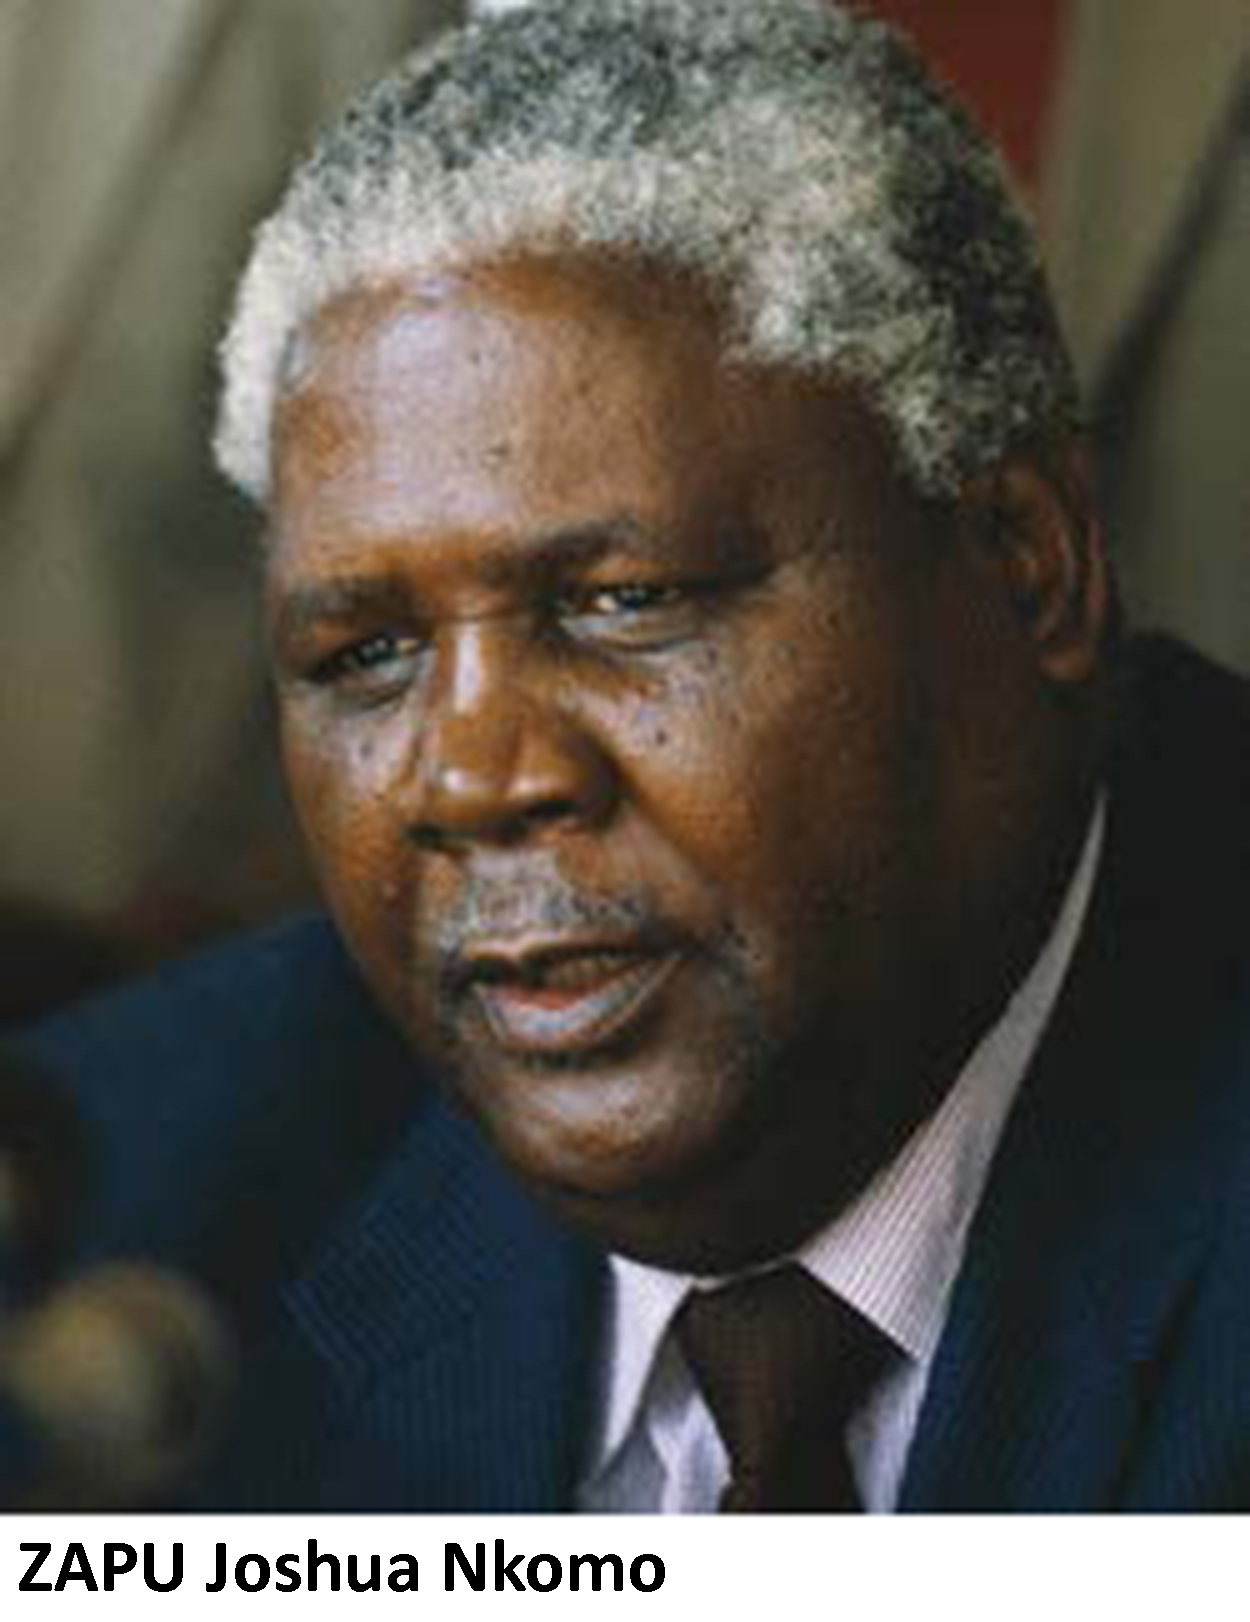 Joshua Nkomo African Nationalist and president of ZAPU